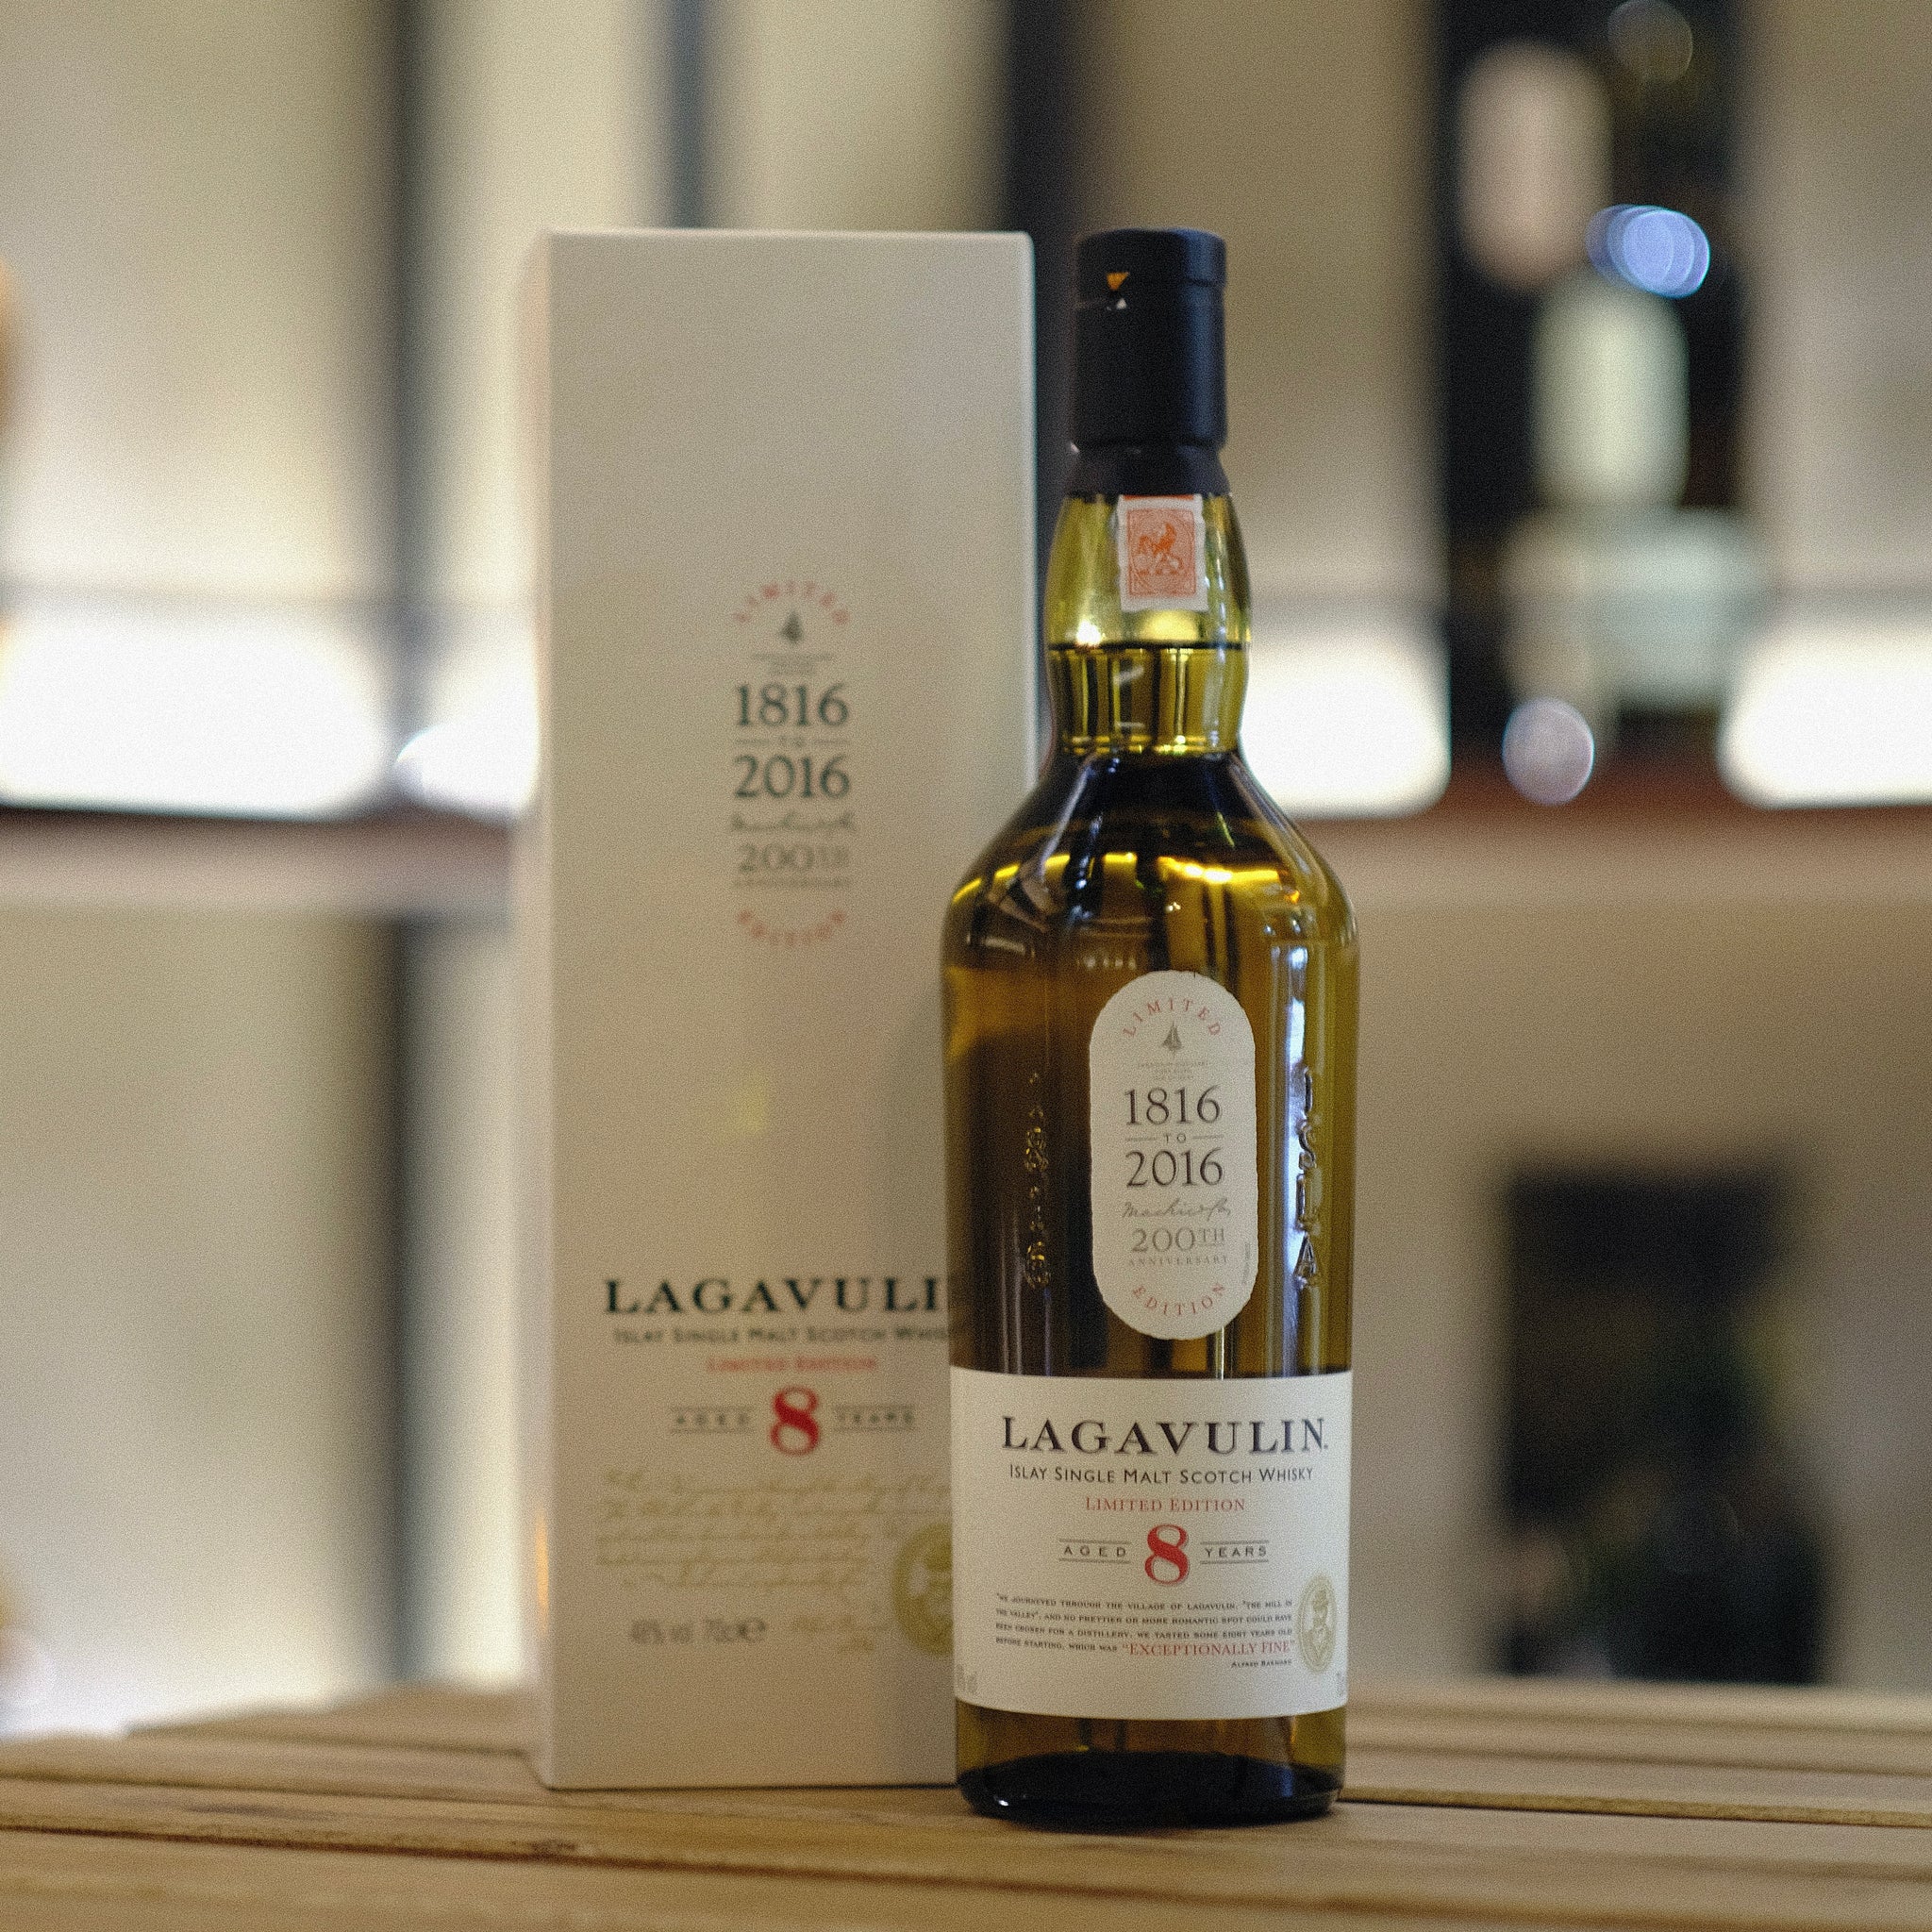 Lagavulin 8 Year Old 200th Anniversary Single Malt Scotch Whisky